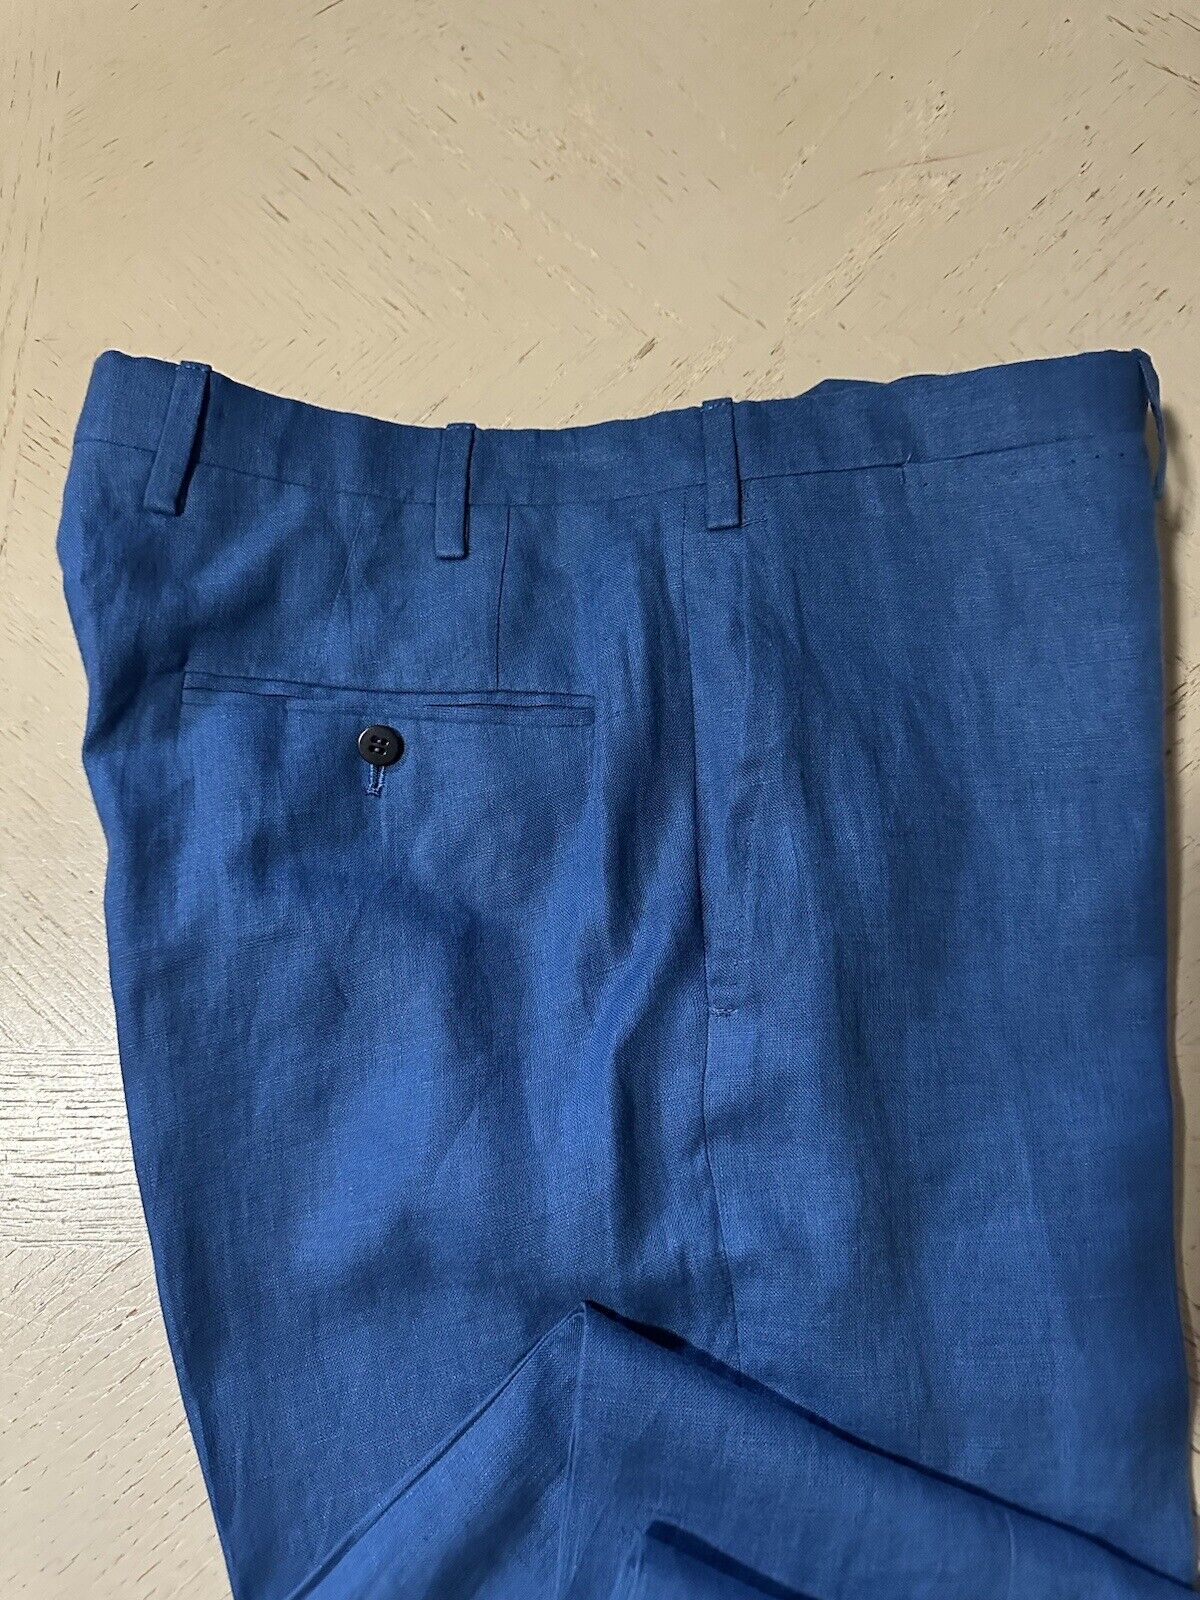 NWT $1395 Kiton Men’s High Waist Linen Pants Blue 34 US/50 Eu Italy